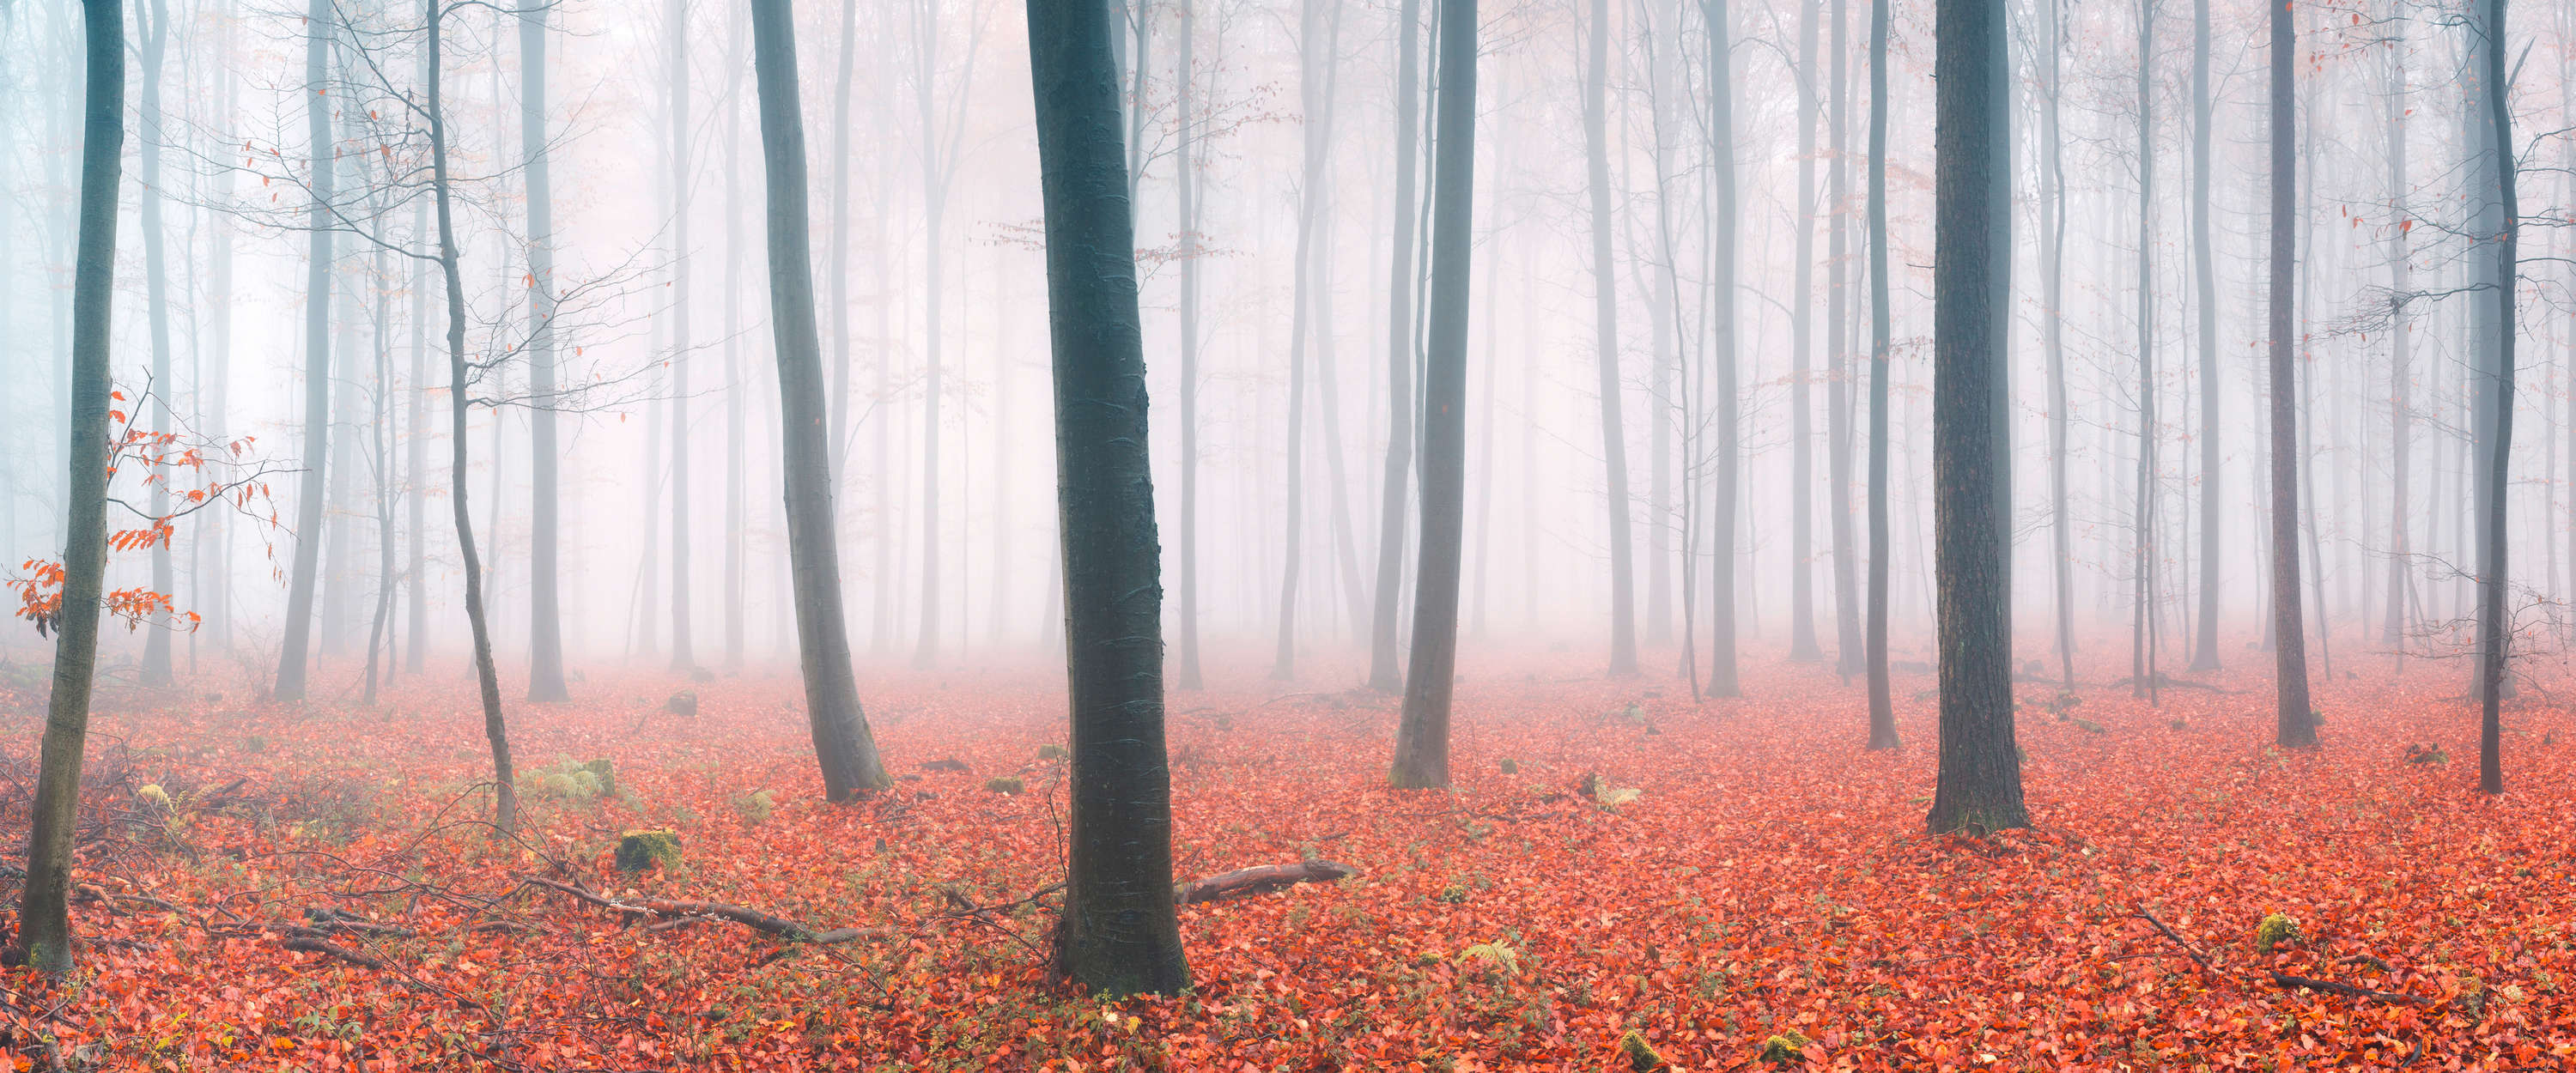             Fototapete Nebelwald mit rotem Herbstlaub
        